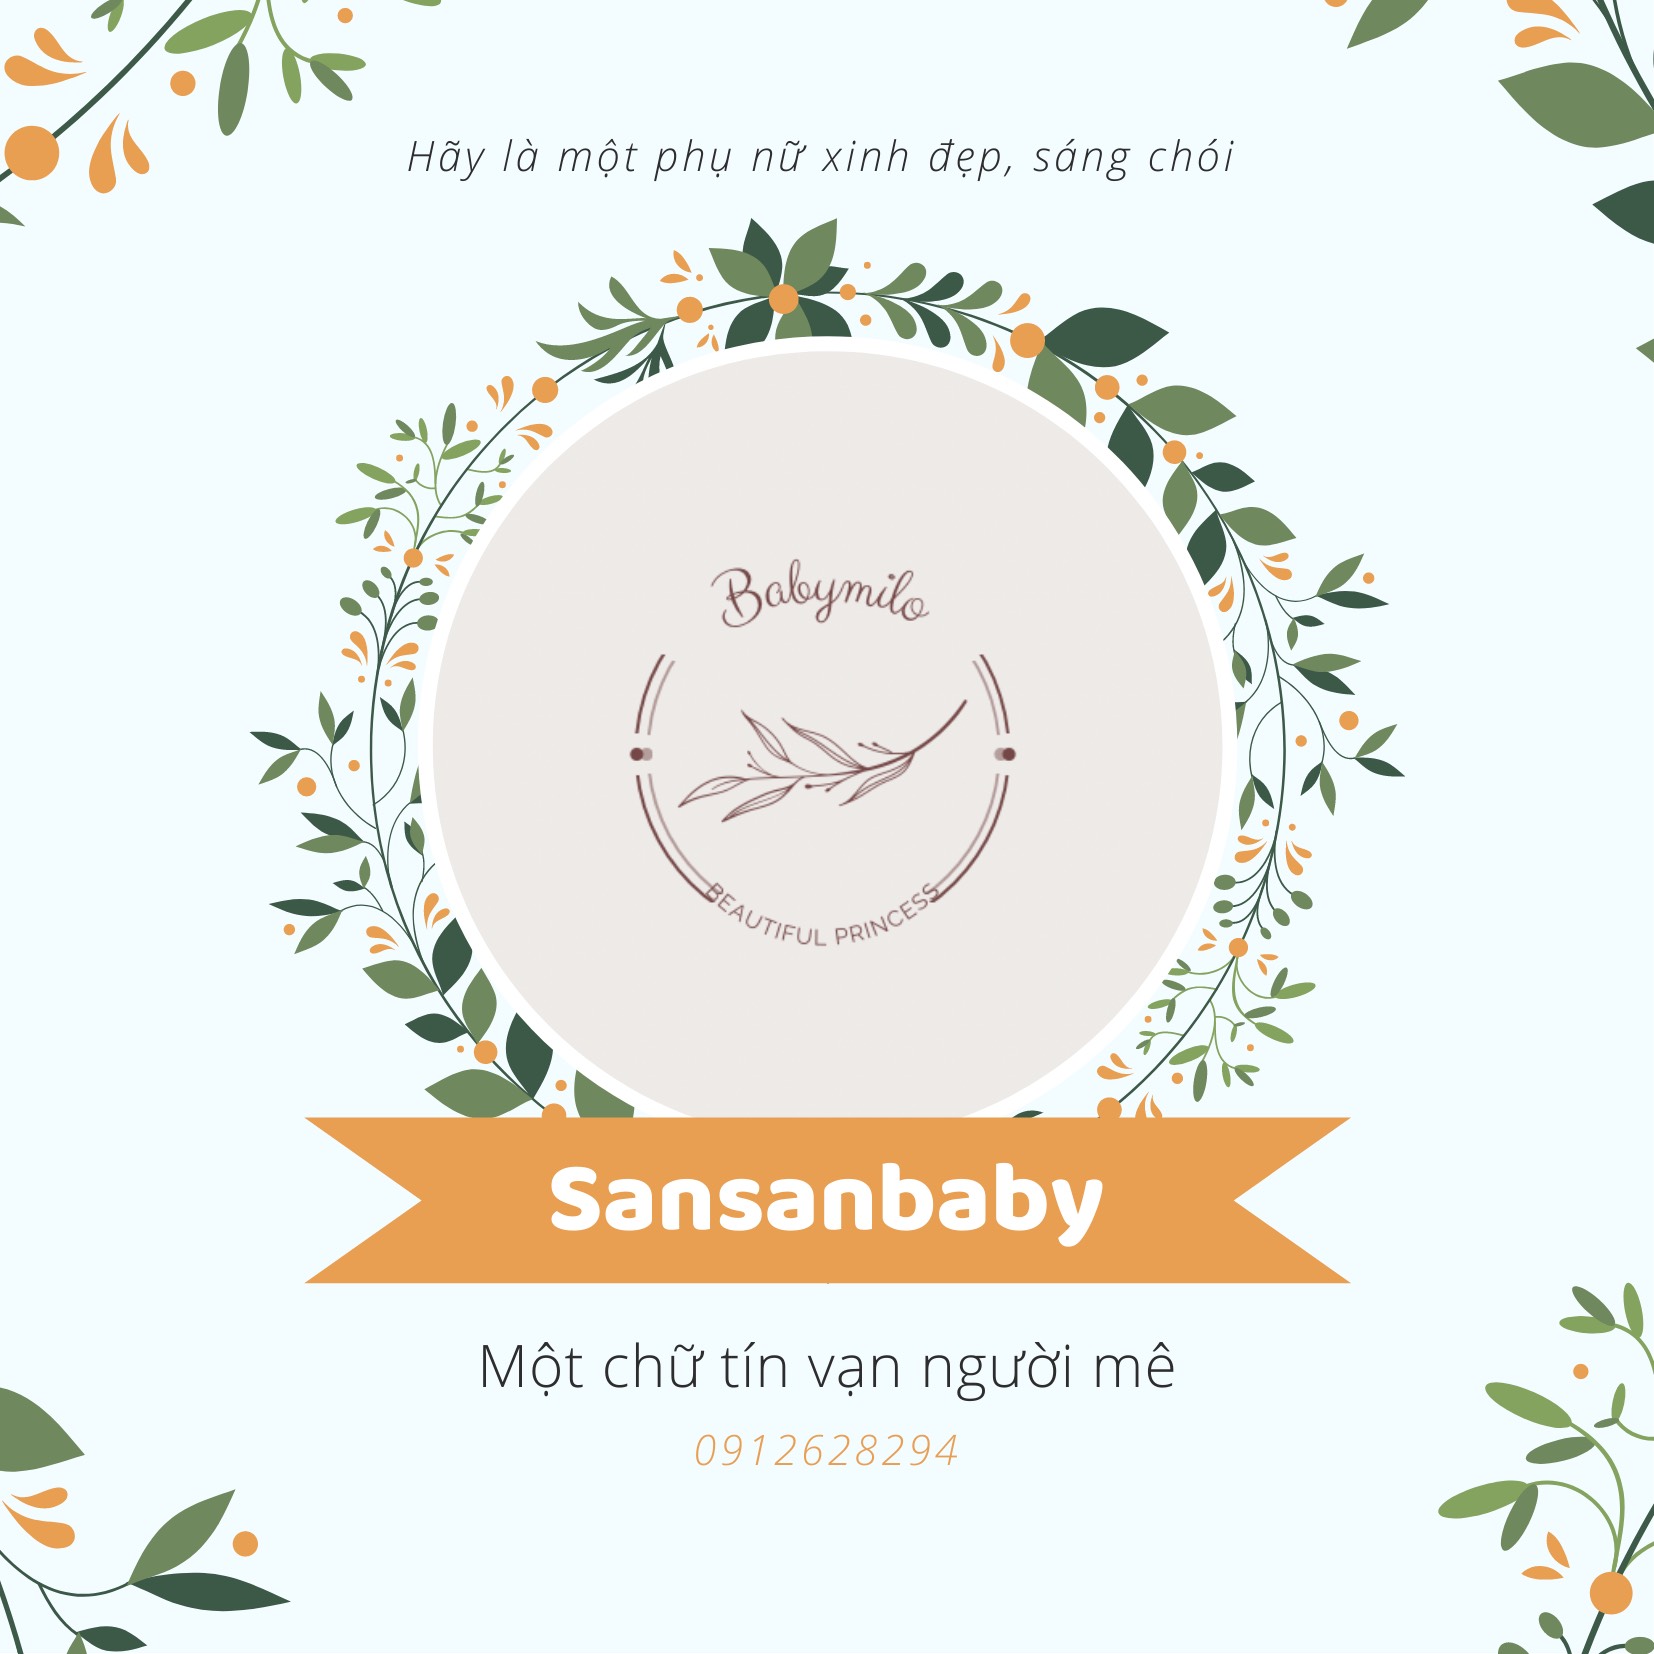 Sansanbaby